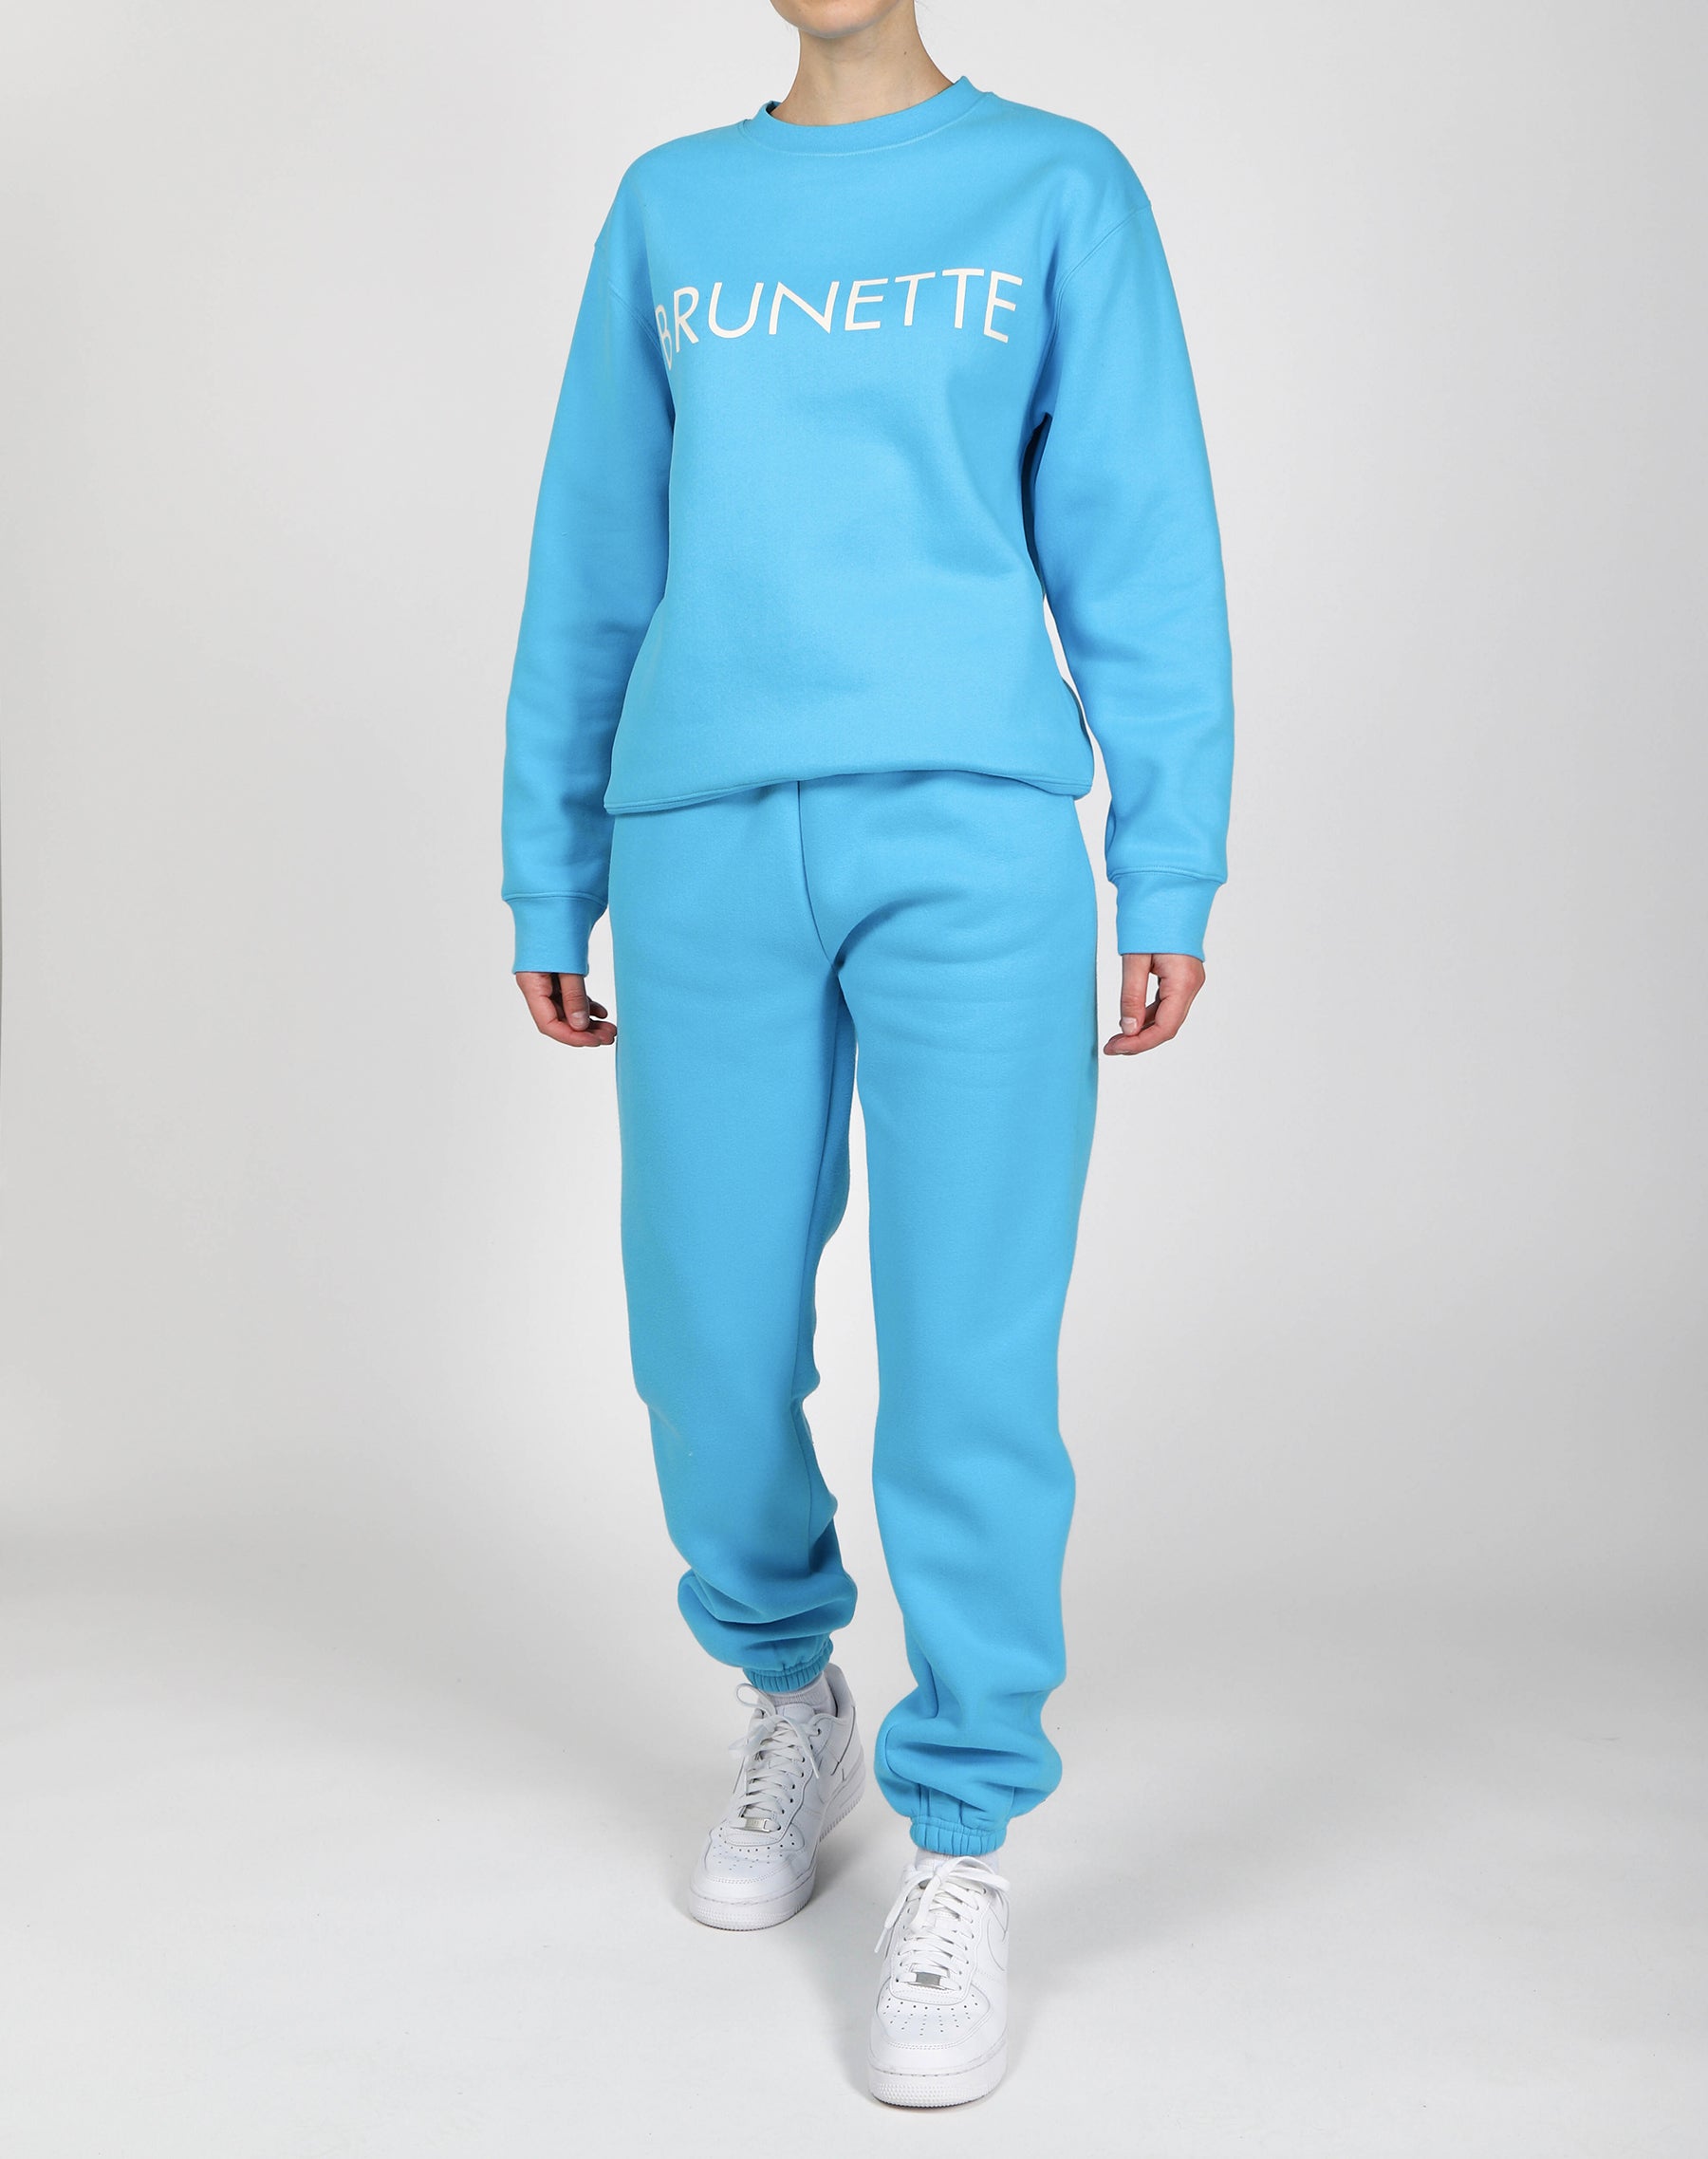 The "BRUNETTE" Classic Crew Neck Sweatshirt | Mediterranean Blue